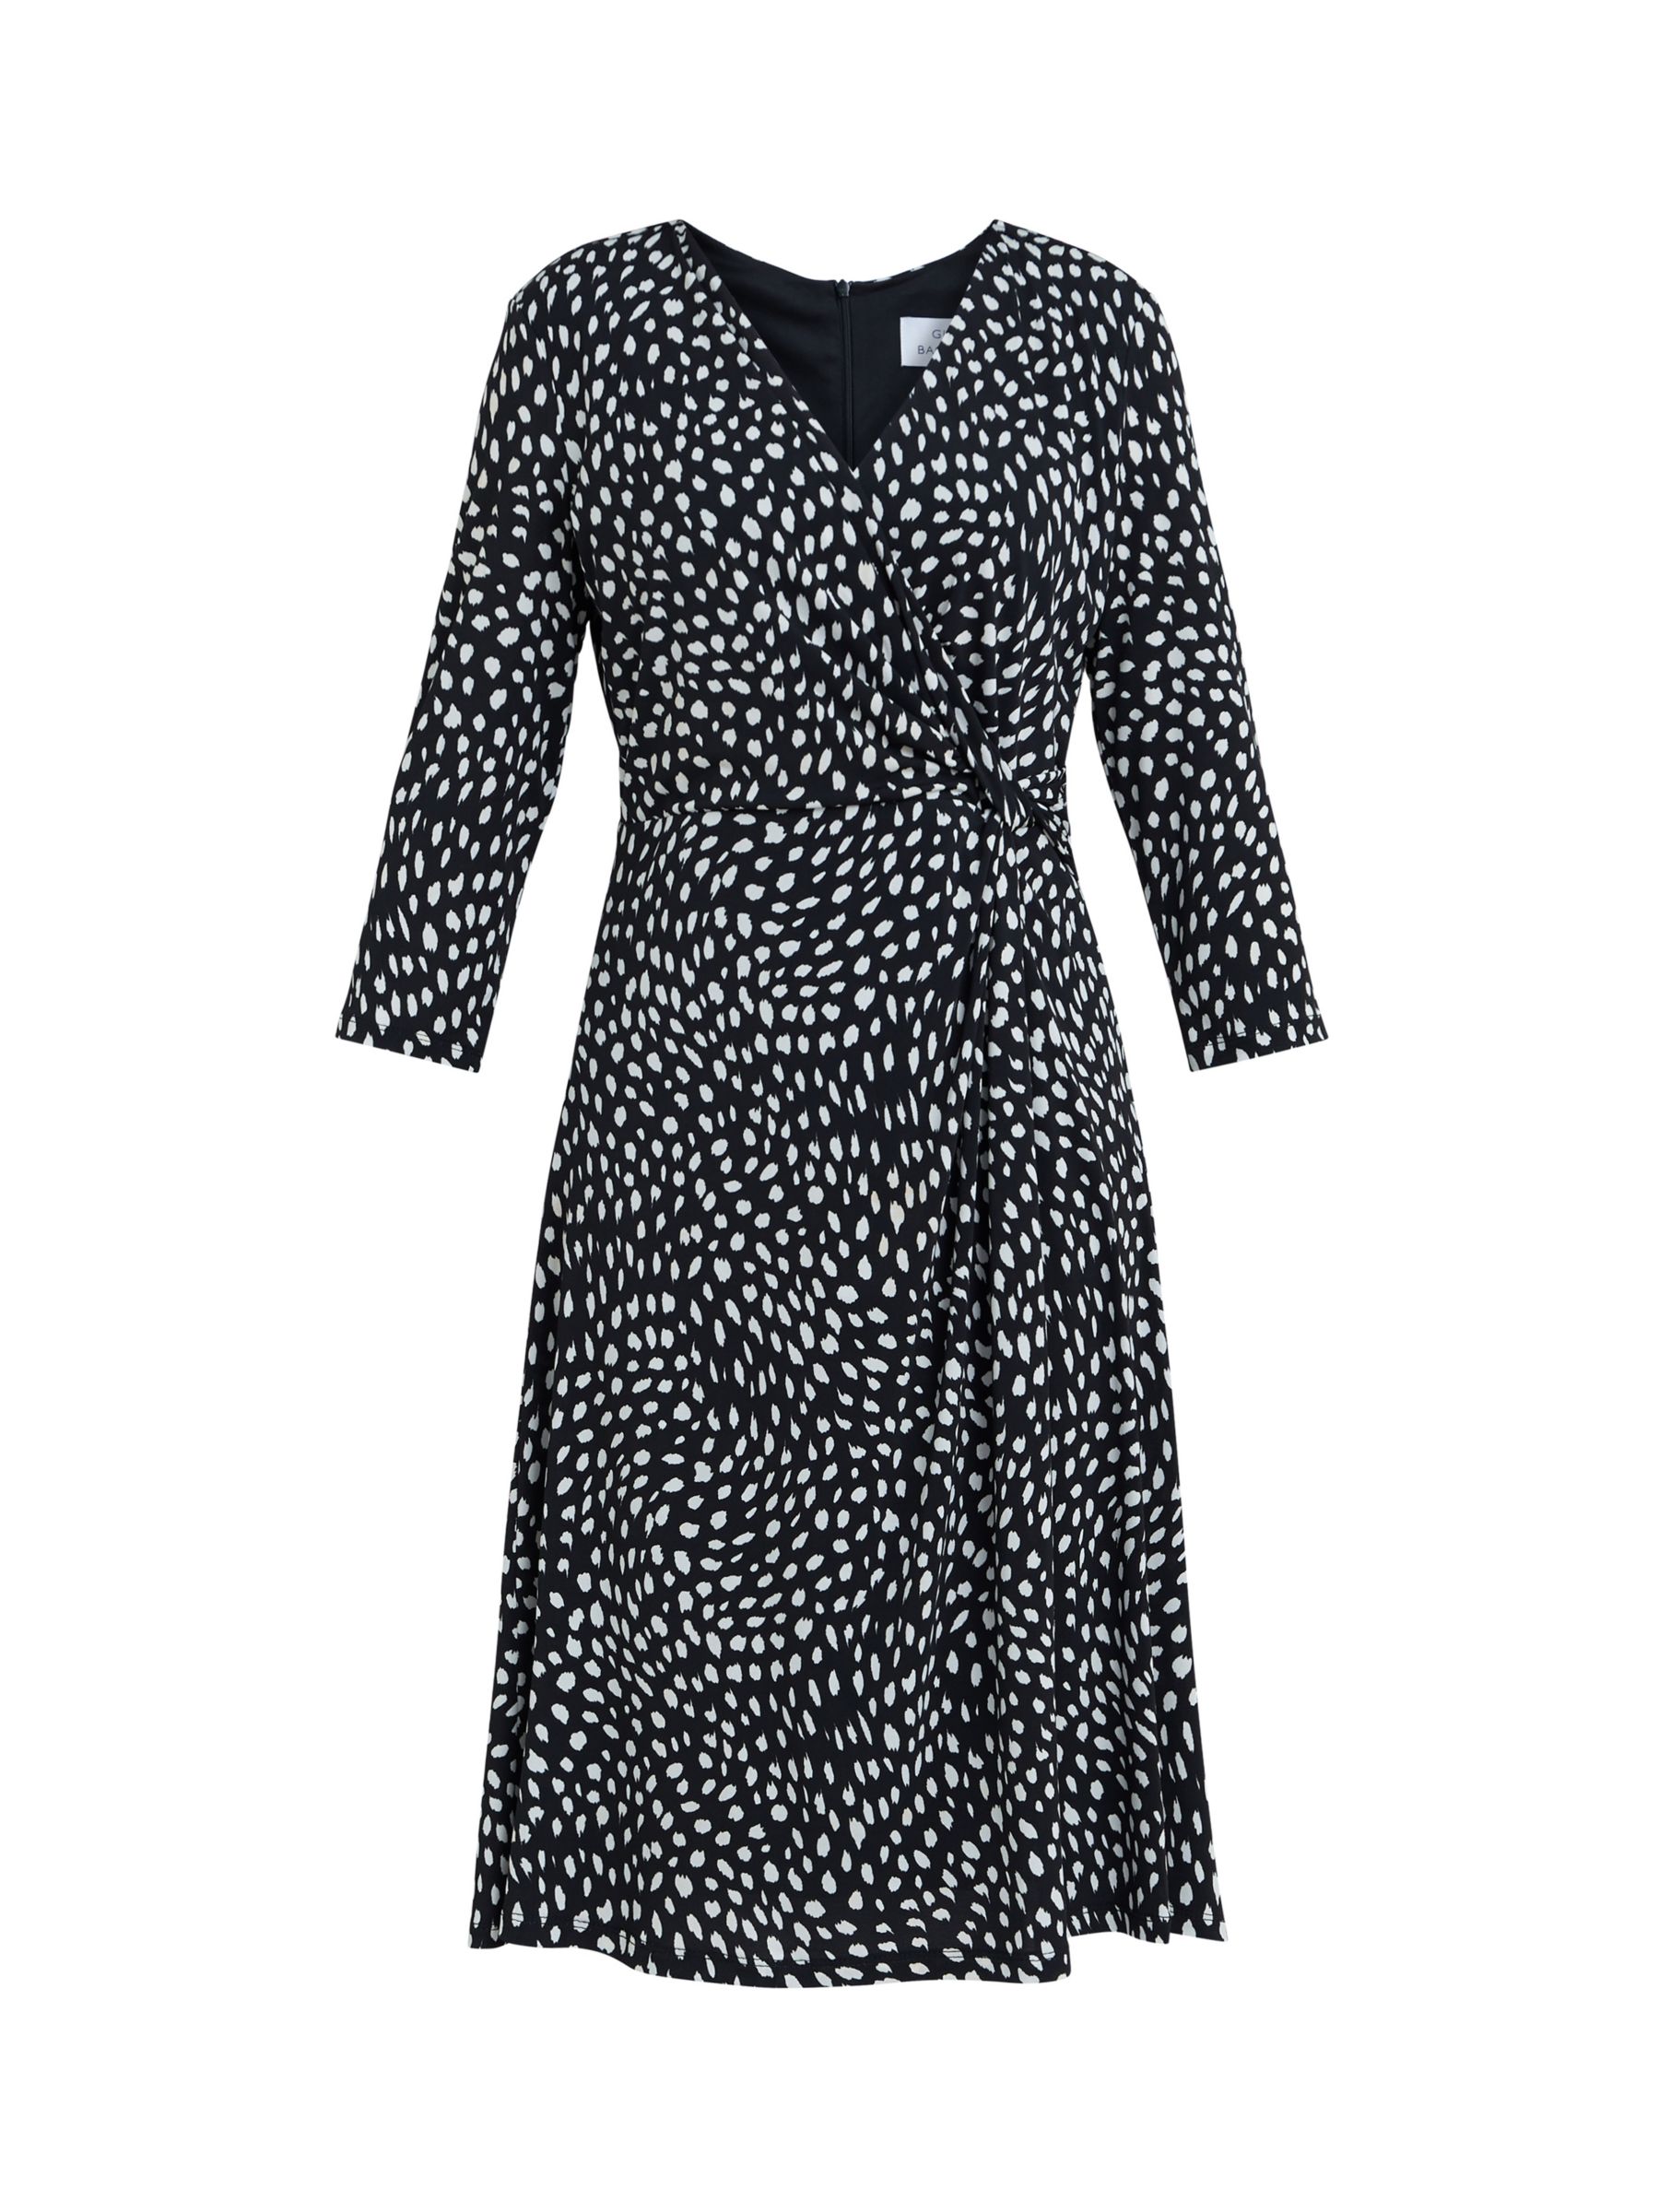 Gina Bacconi Camilla Wrap Dress, Black/Offwhite at John Lewis & Partners